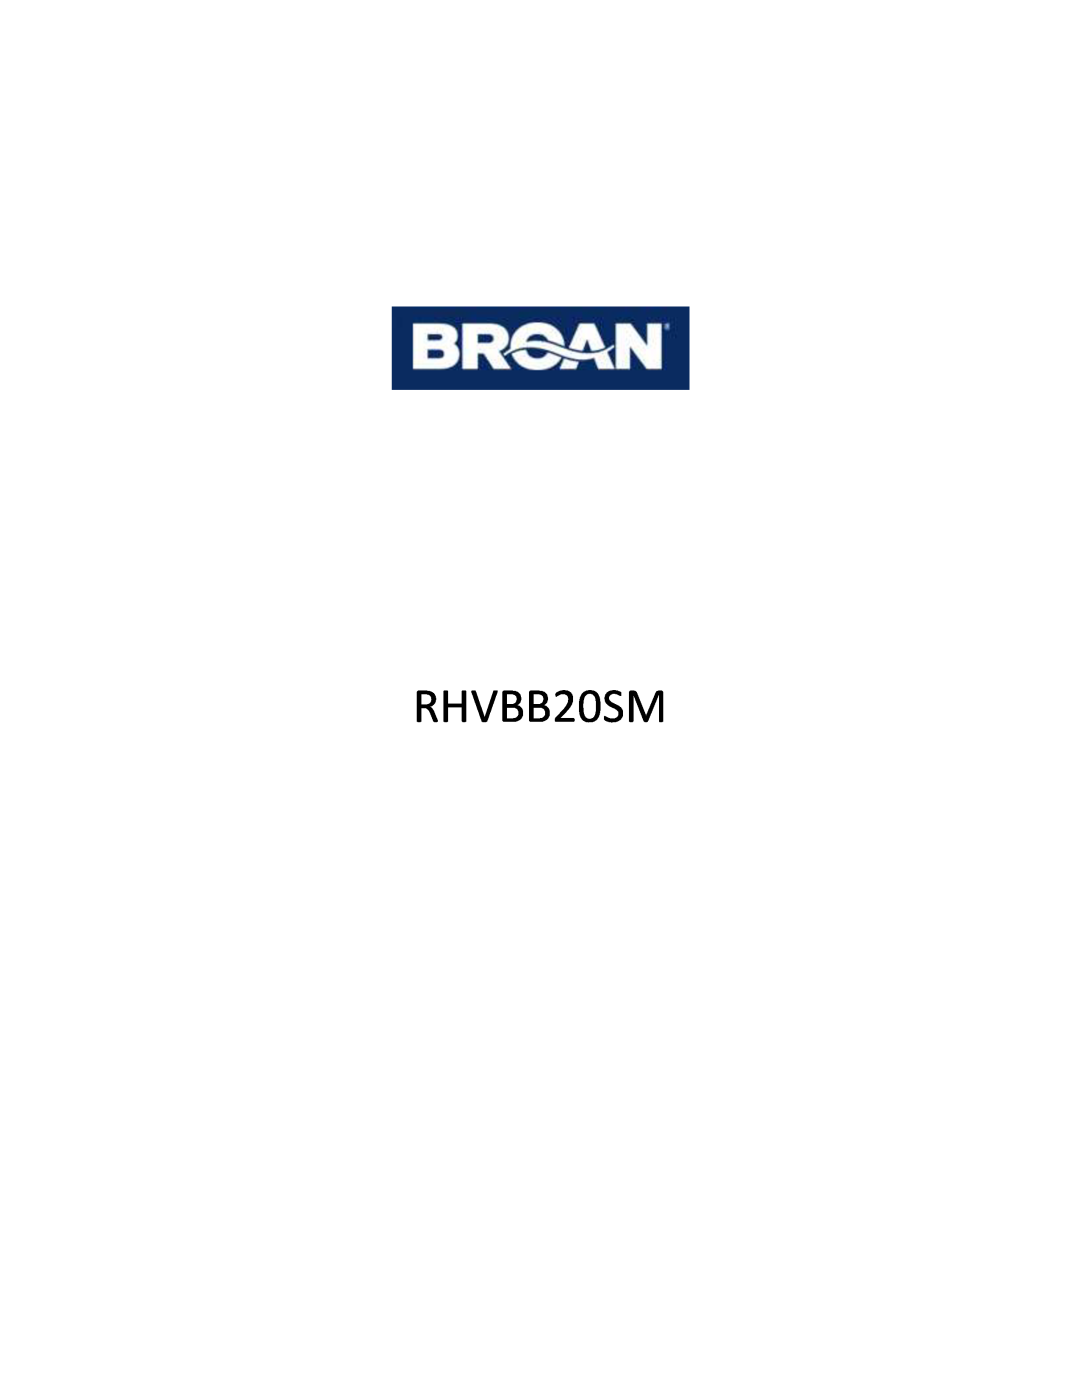 Broan RHVBB20SM manual 